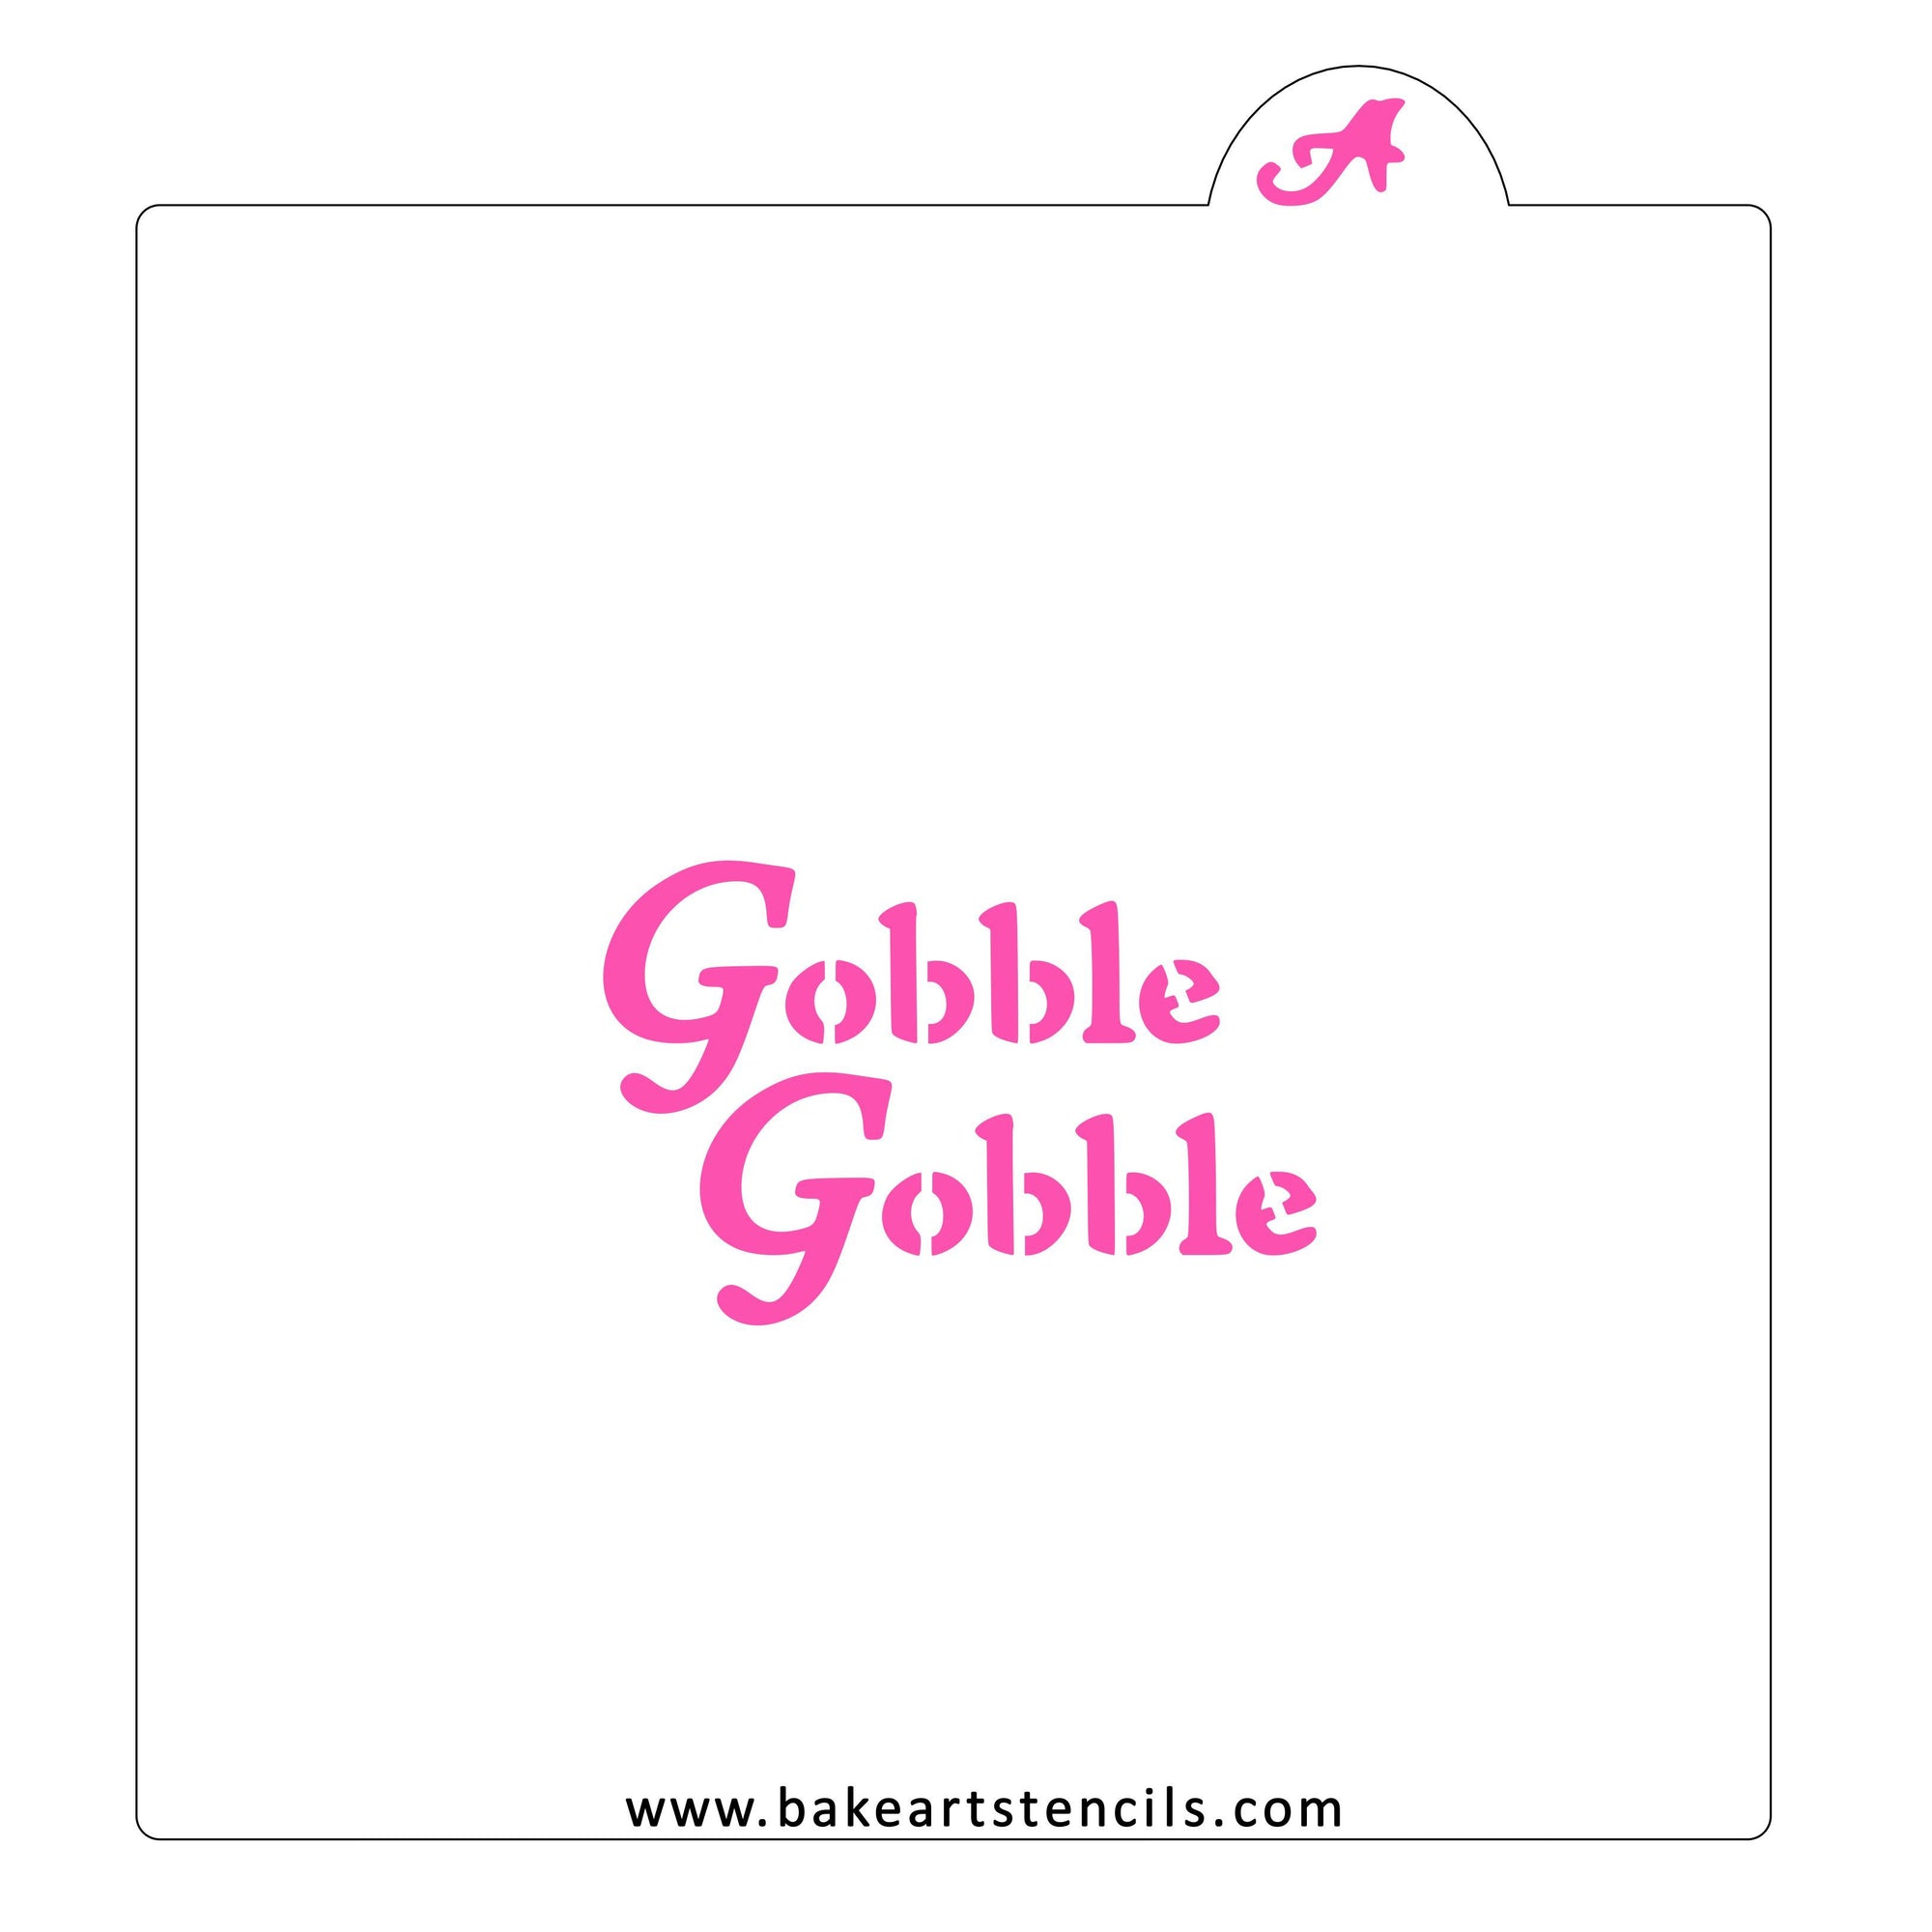 Gobble Gobble Cookie Stencil bakeartstencil